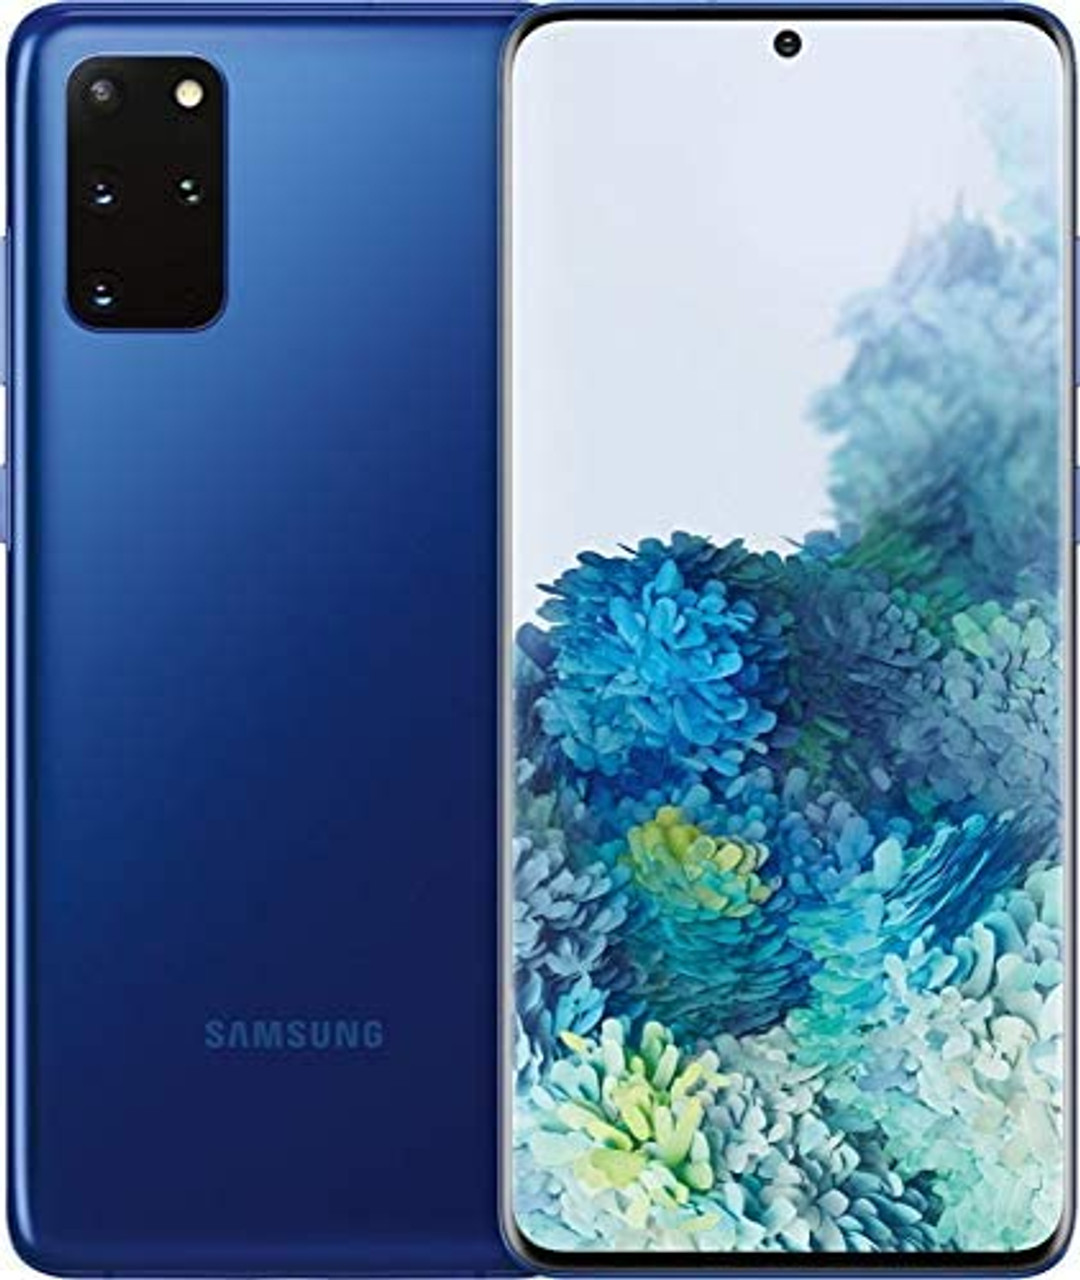 Samsung Galaxy S20+ Plus 5G, G986U, Excellent, Refurbished, 5G, Gray, Blue, Aura Blue, Cloud Blue, Black, Android, Smartphone, LTE, Unlocked